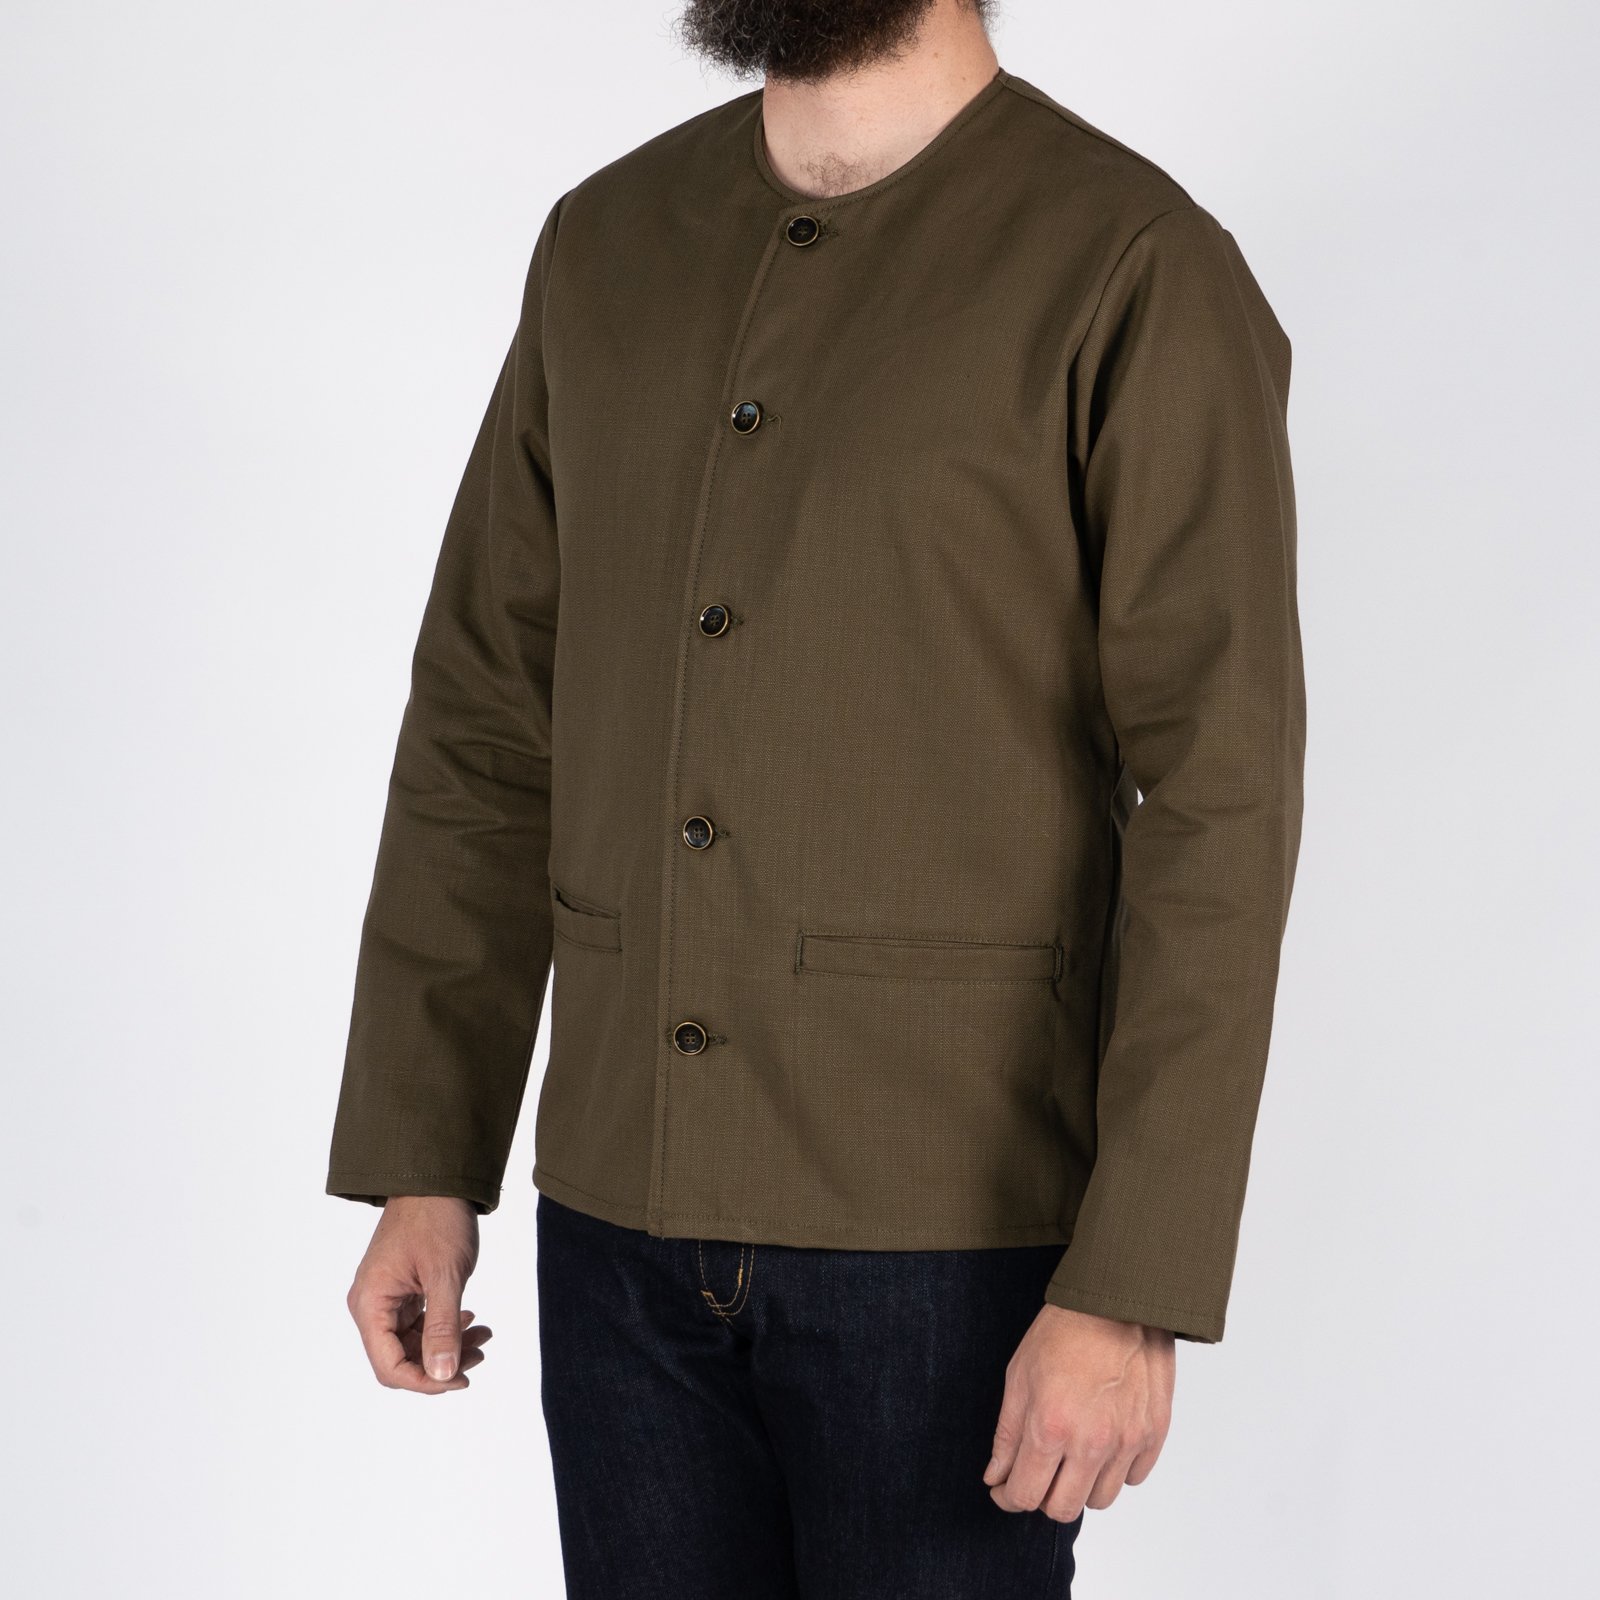  Smart Jacket - Raw Cotton Canvas - Olive - side 